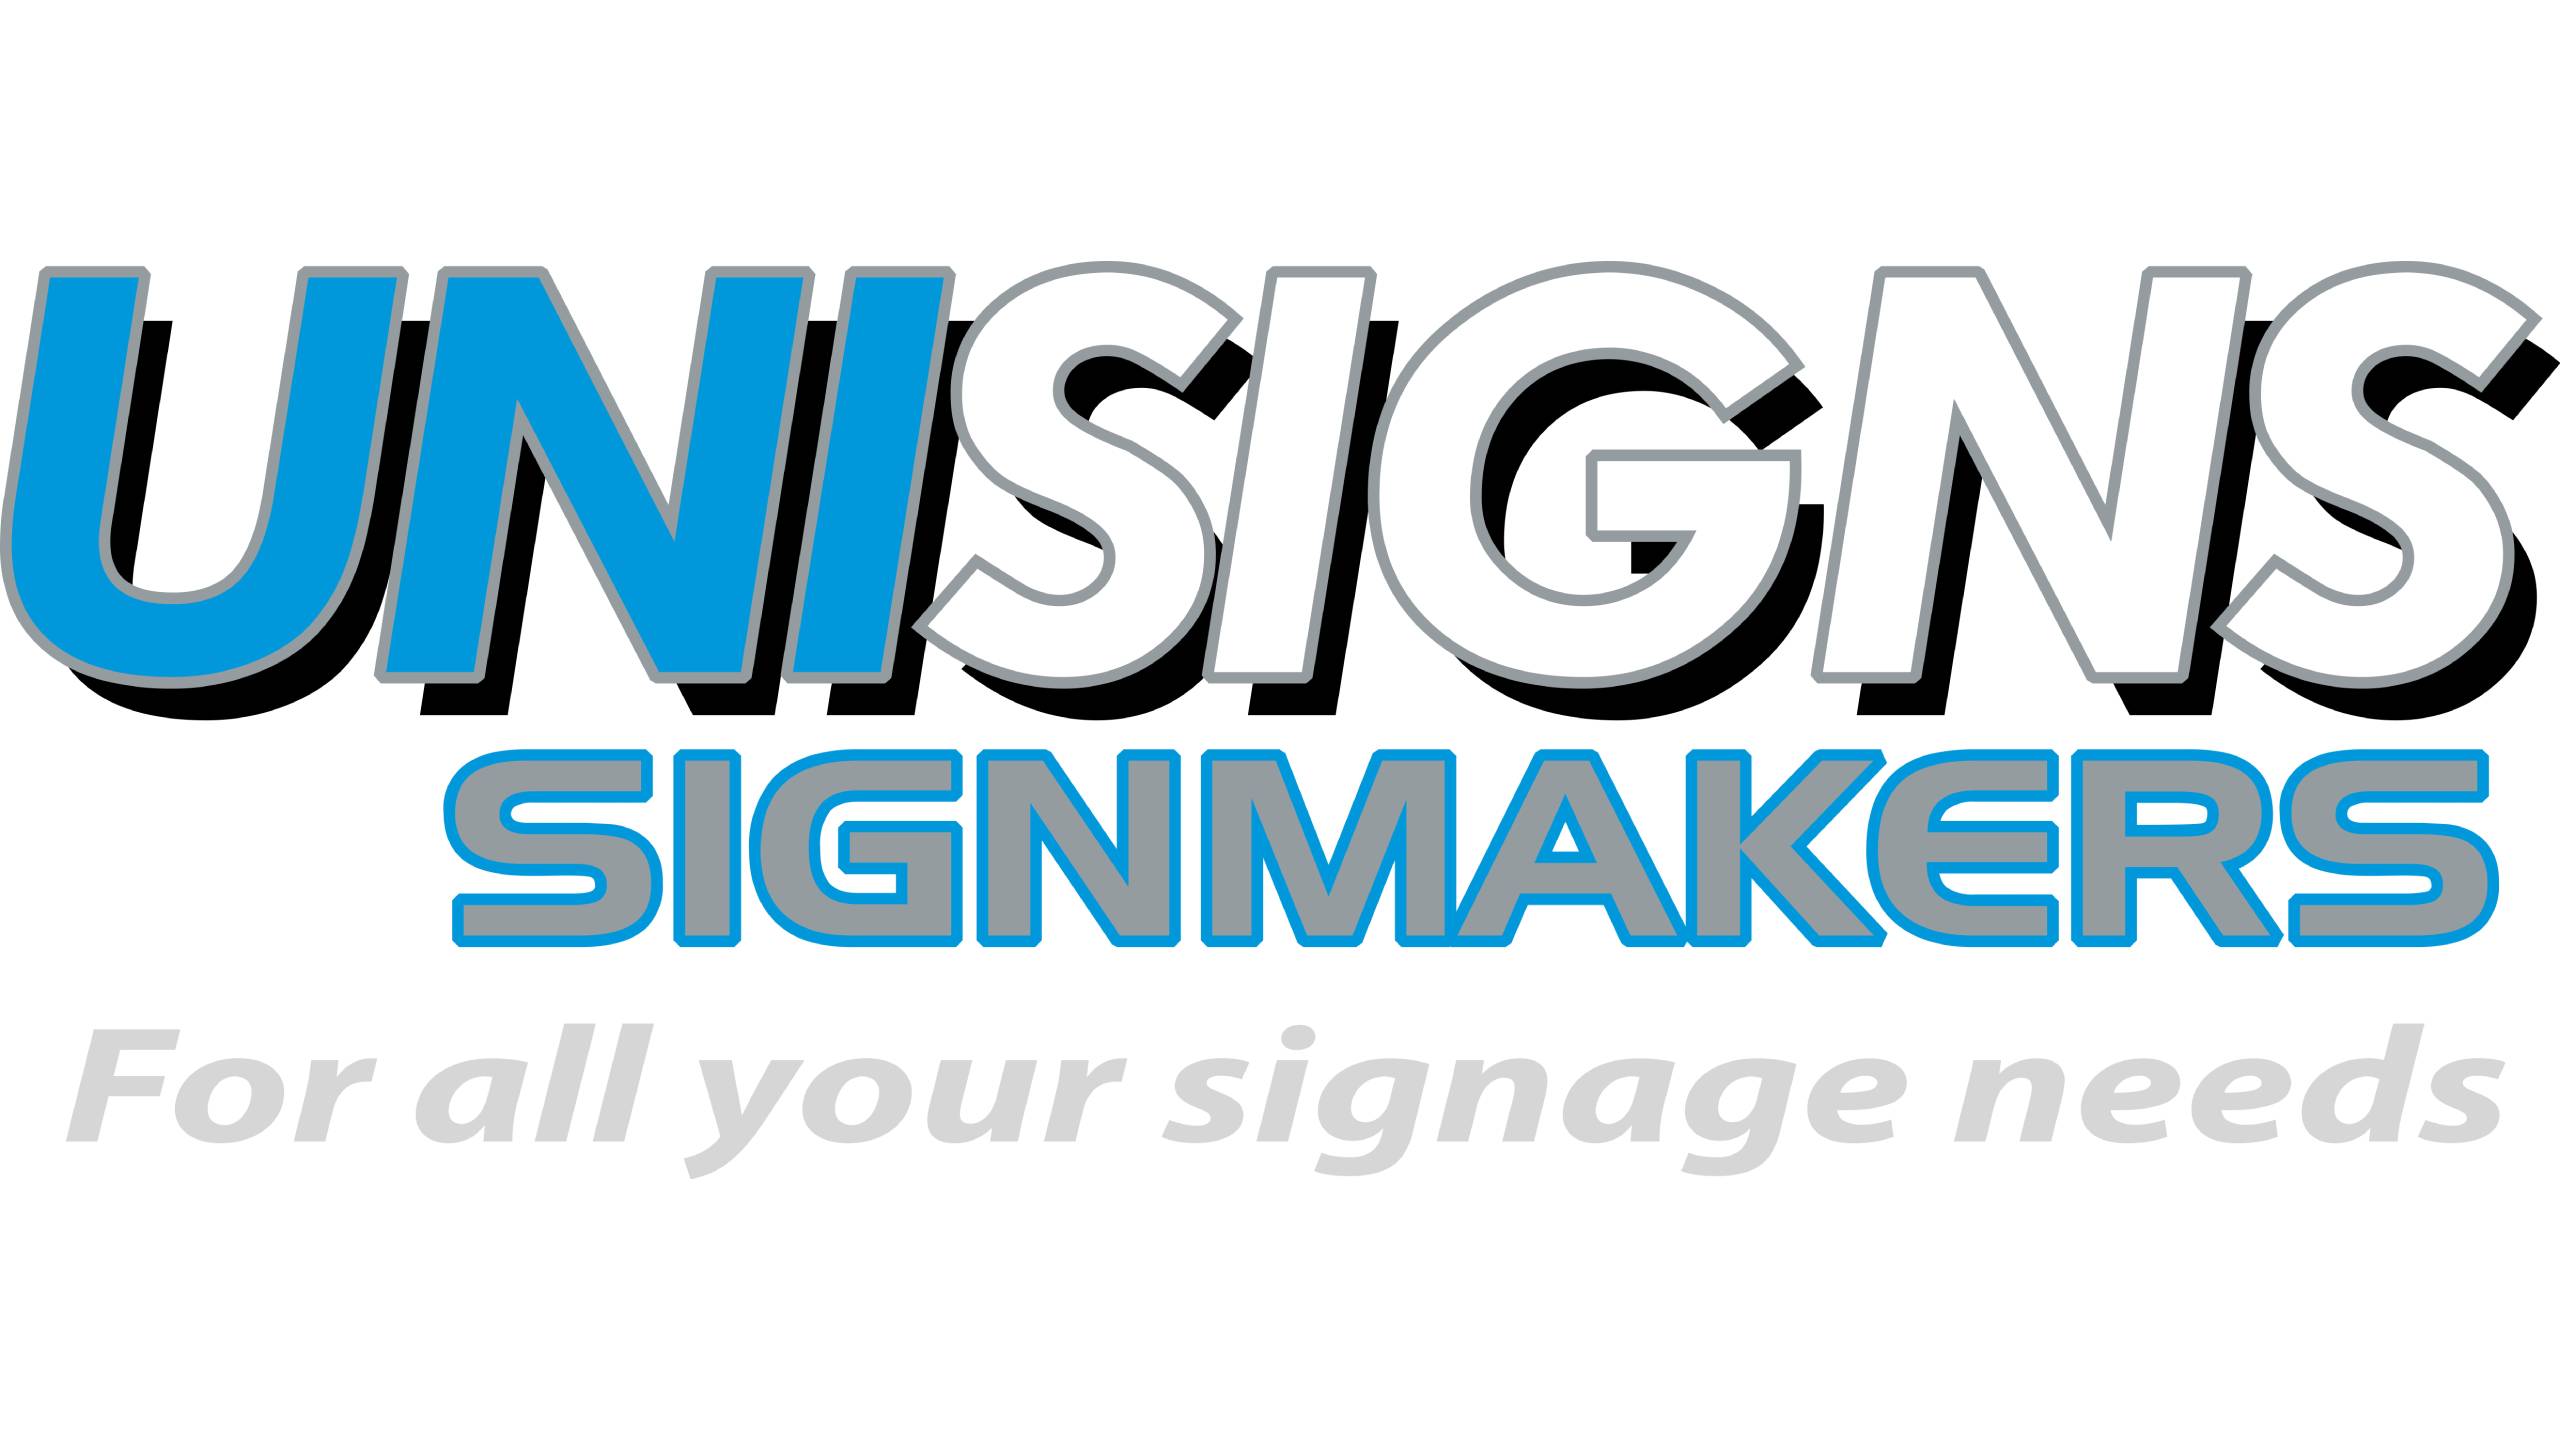 sign makers logos